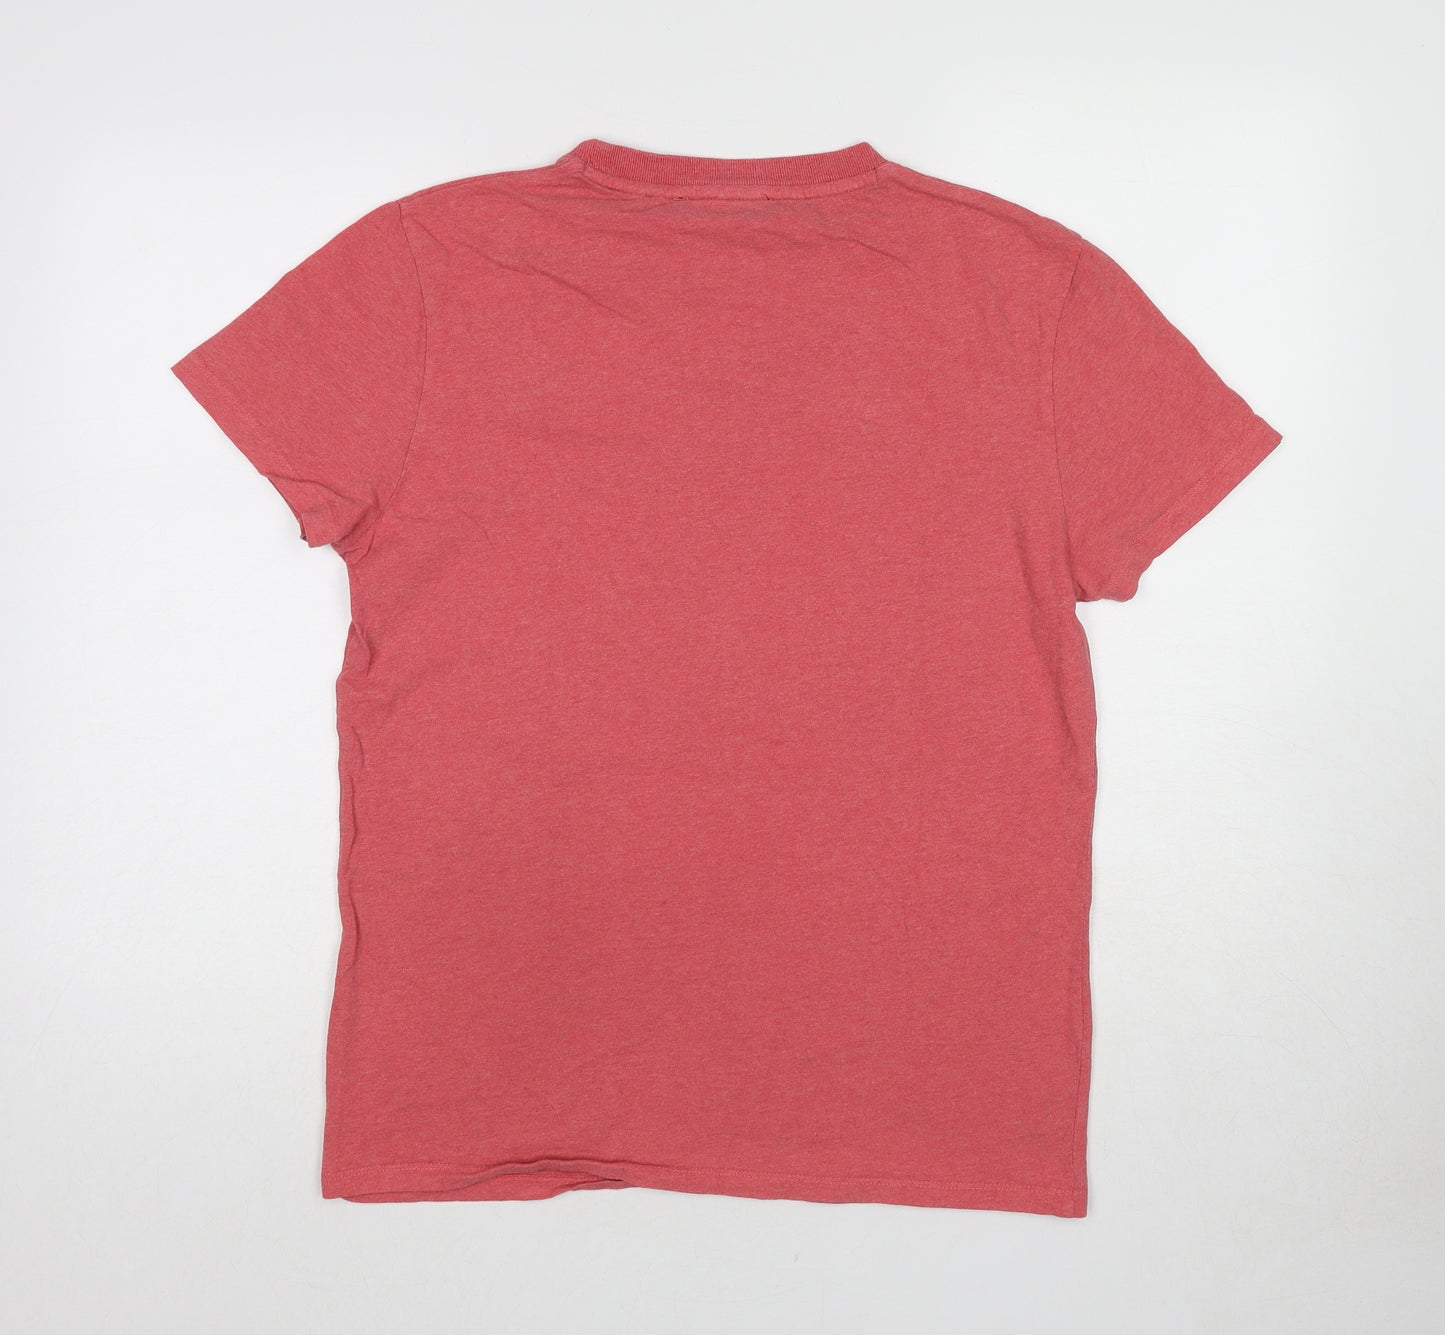 Superdry Womens Pink Cotton Basic T-Shirt Size M Round Neck